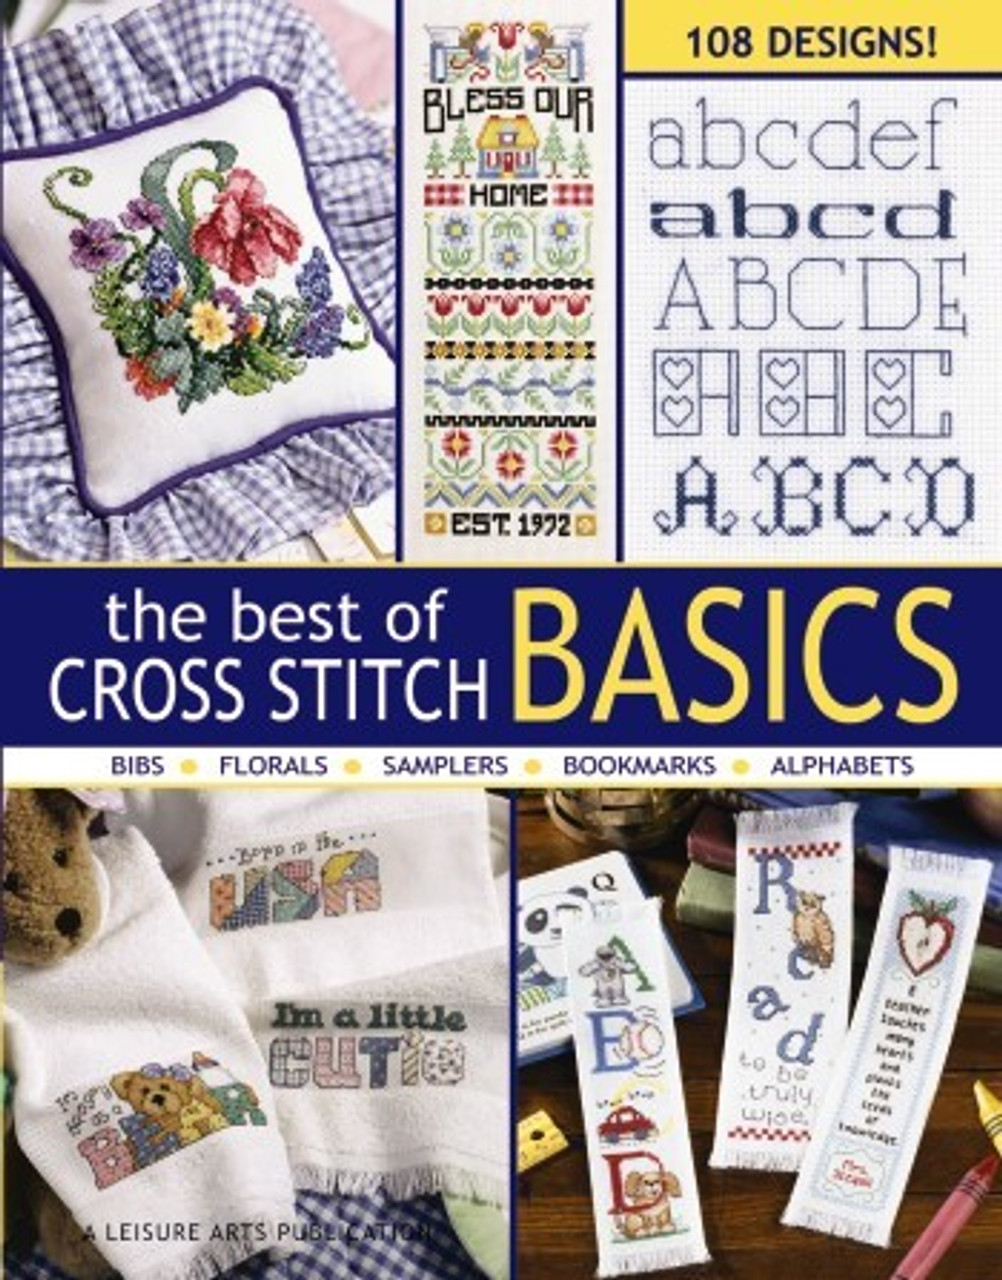 262 Pattern Crochet Crochet Books E-book PDF Crochet and Knitting PDF  Crochet Craft E-book Pattern PDF Digital Instant Download 